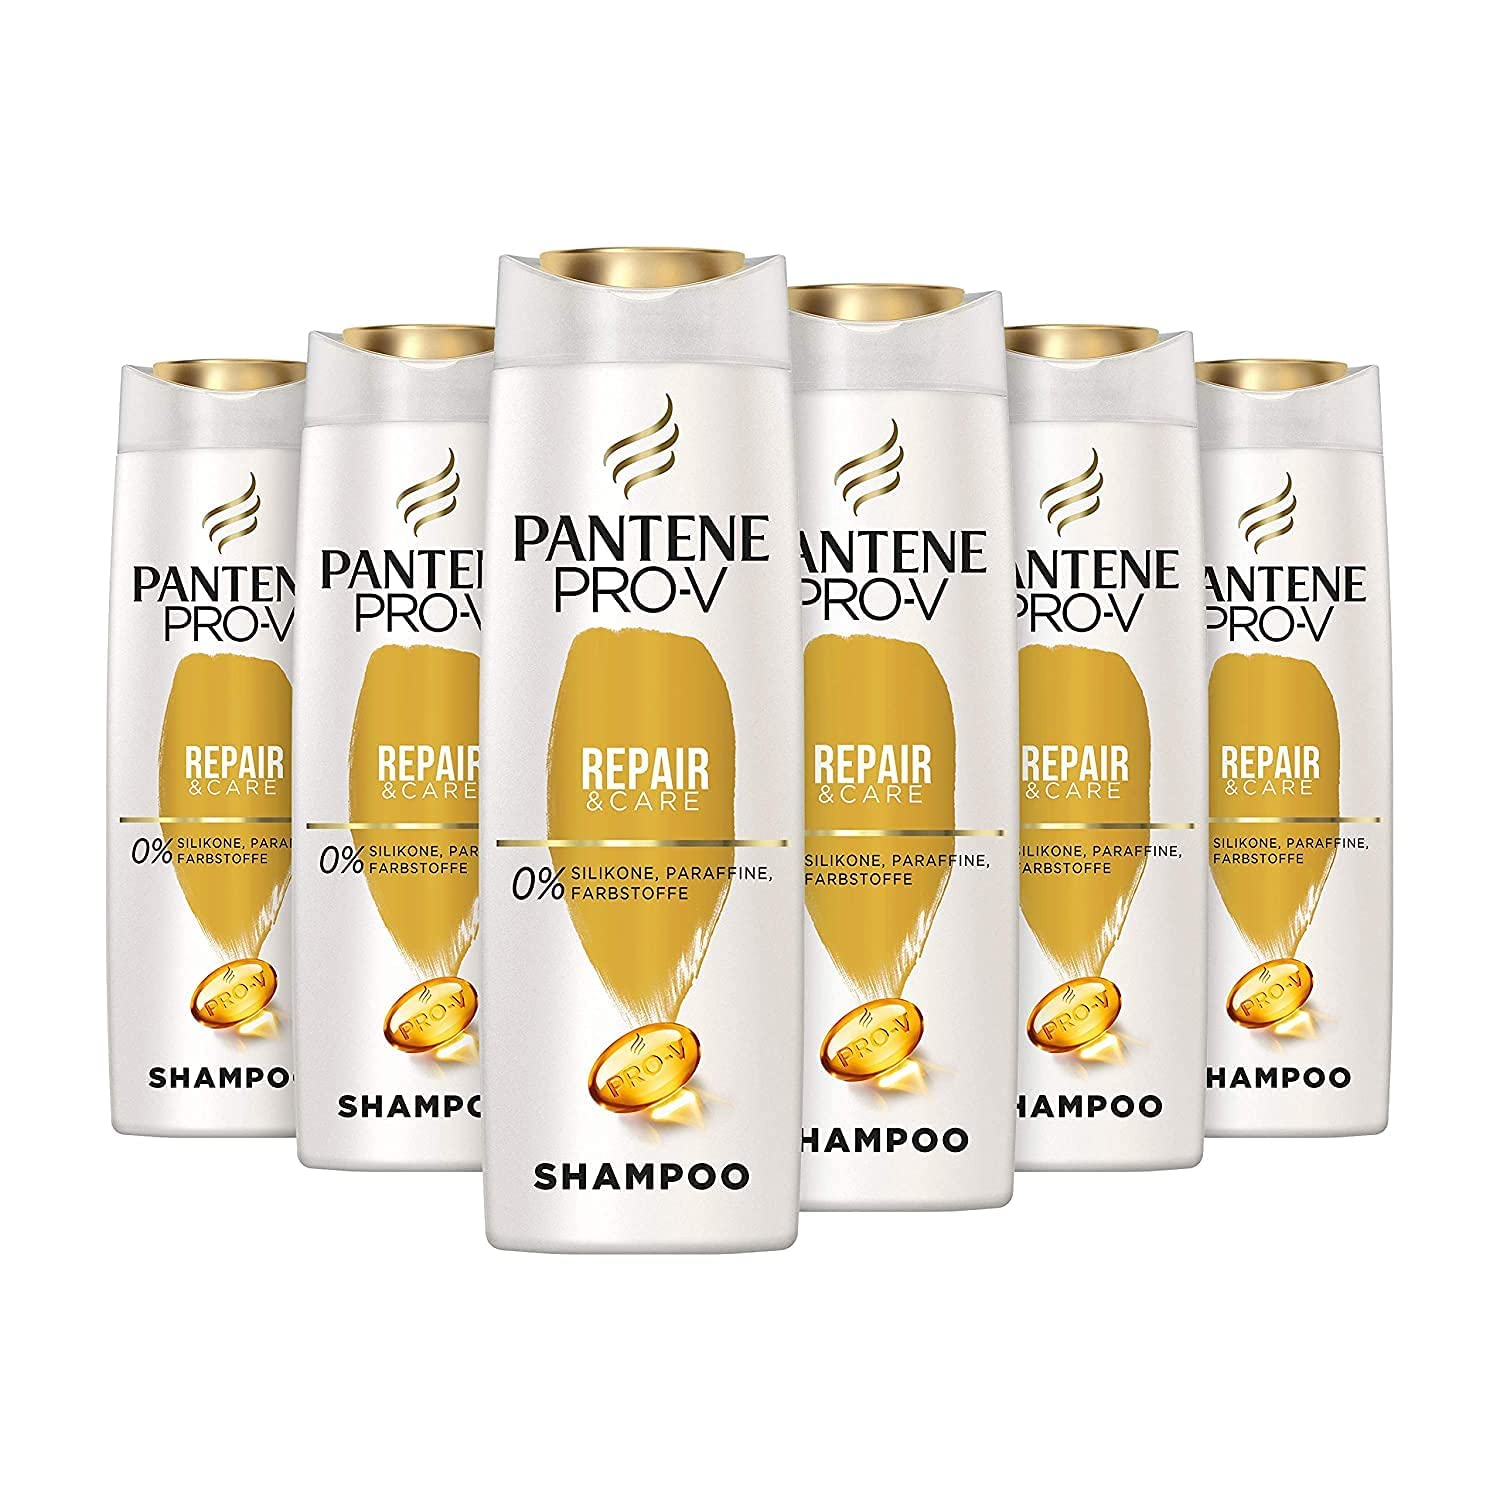 Pantene Pro-V Repair & Care Shampoo for Damaged Hair, Pack of 6 (6 x 300 ml), Hair Care for Dry Hair, Hair Care Shine, No Silicone, Beauty